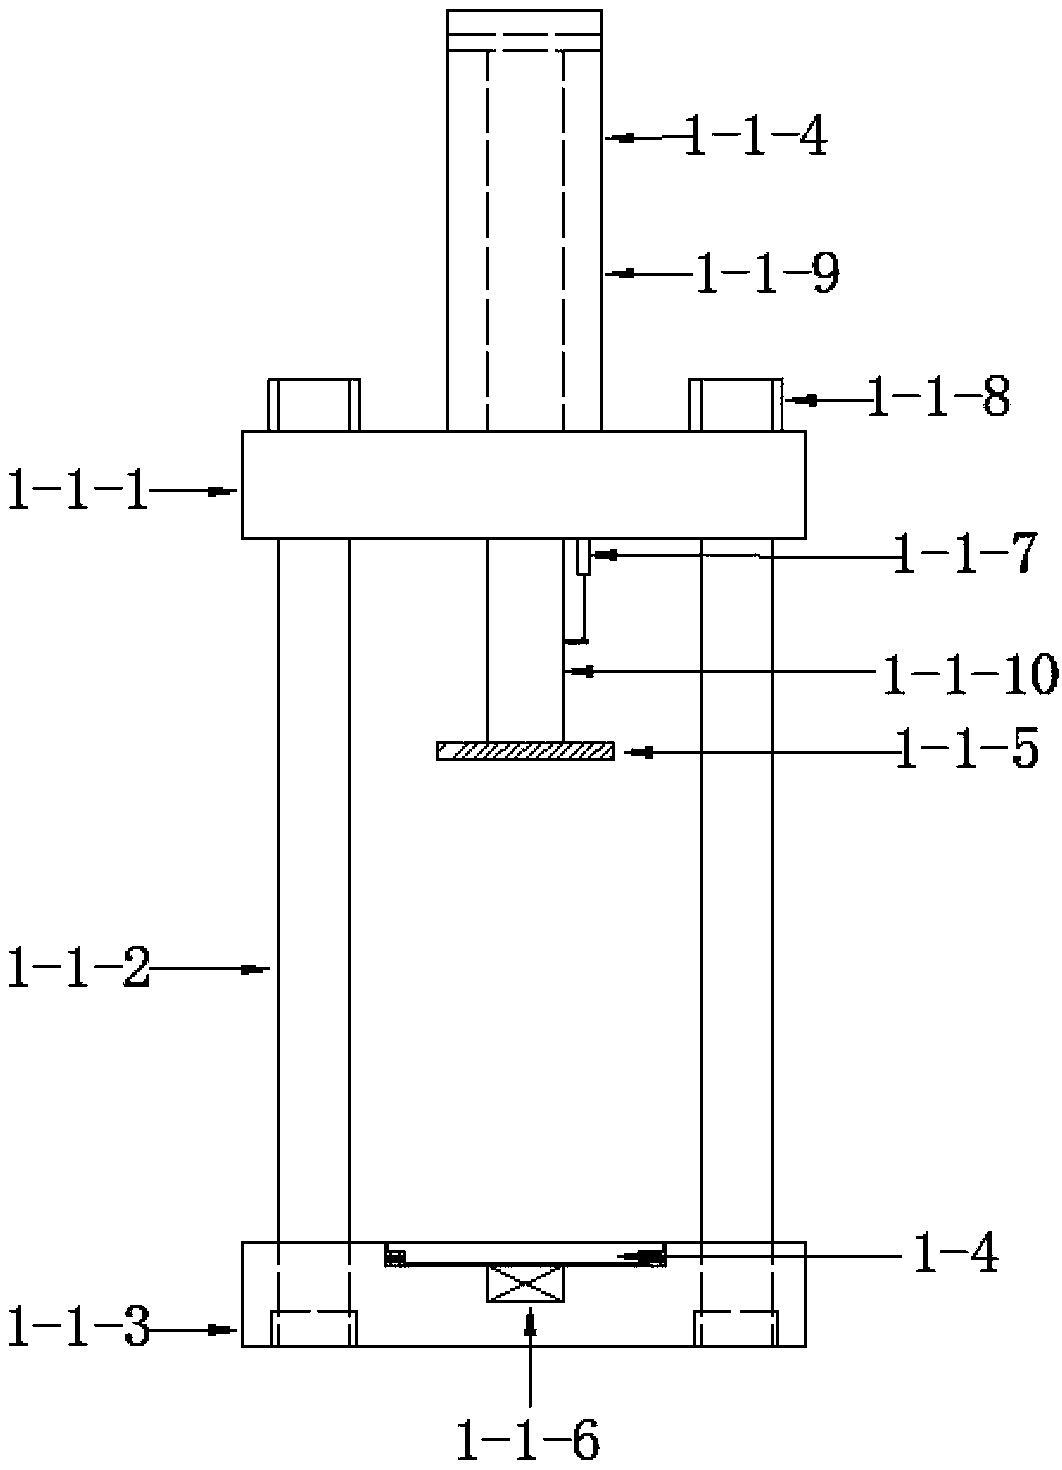 Three-dimensional slip-casting model test servo control system and testing method